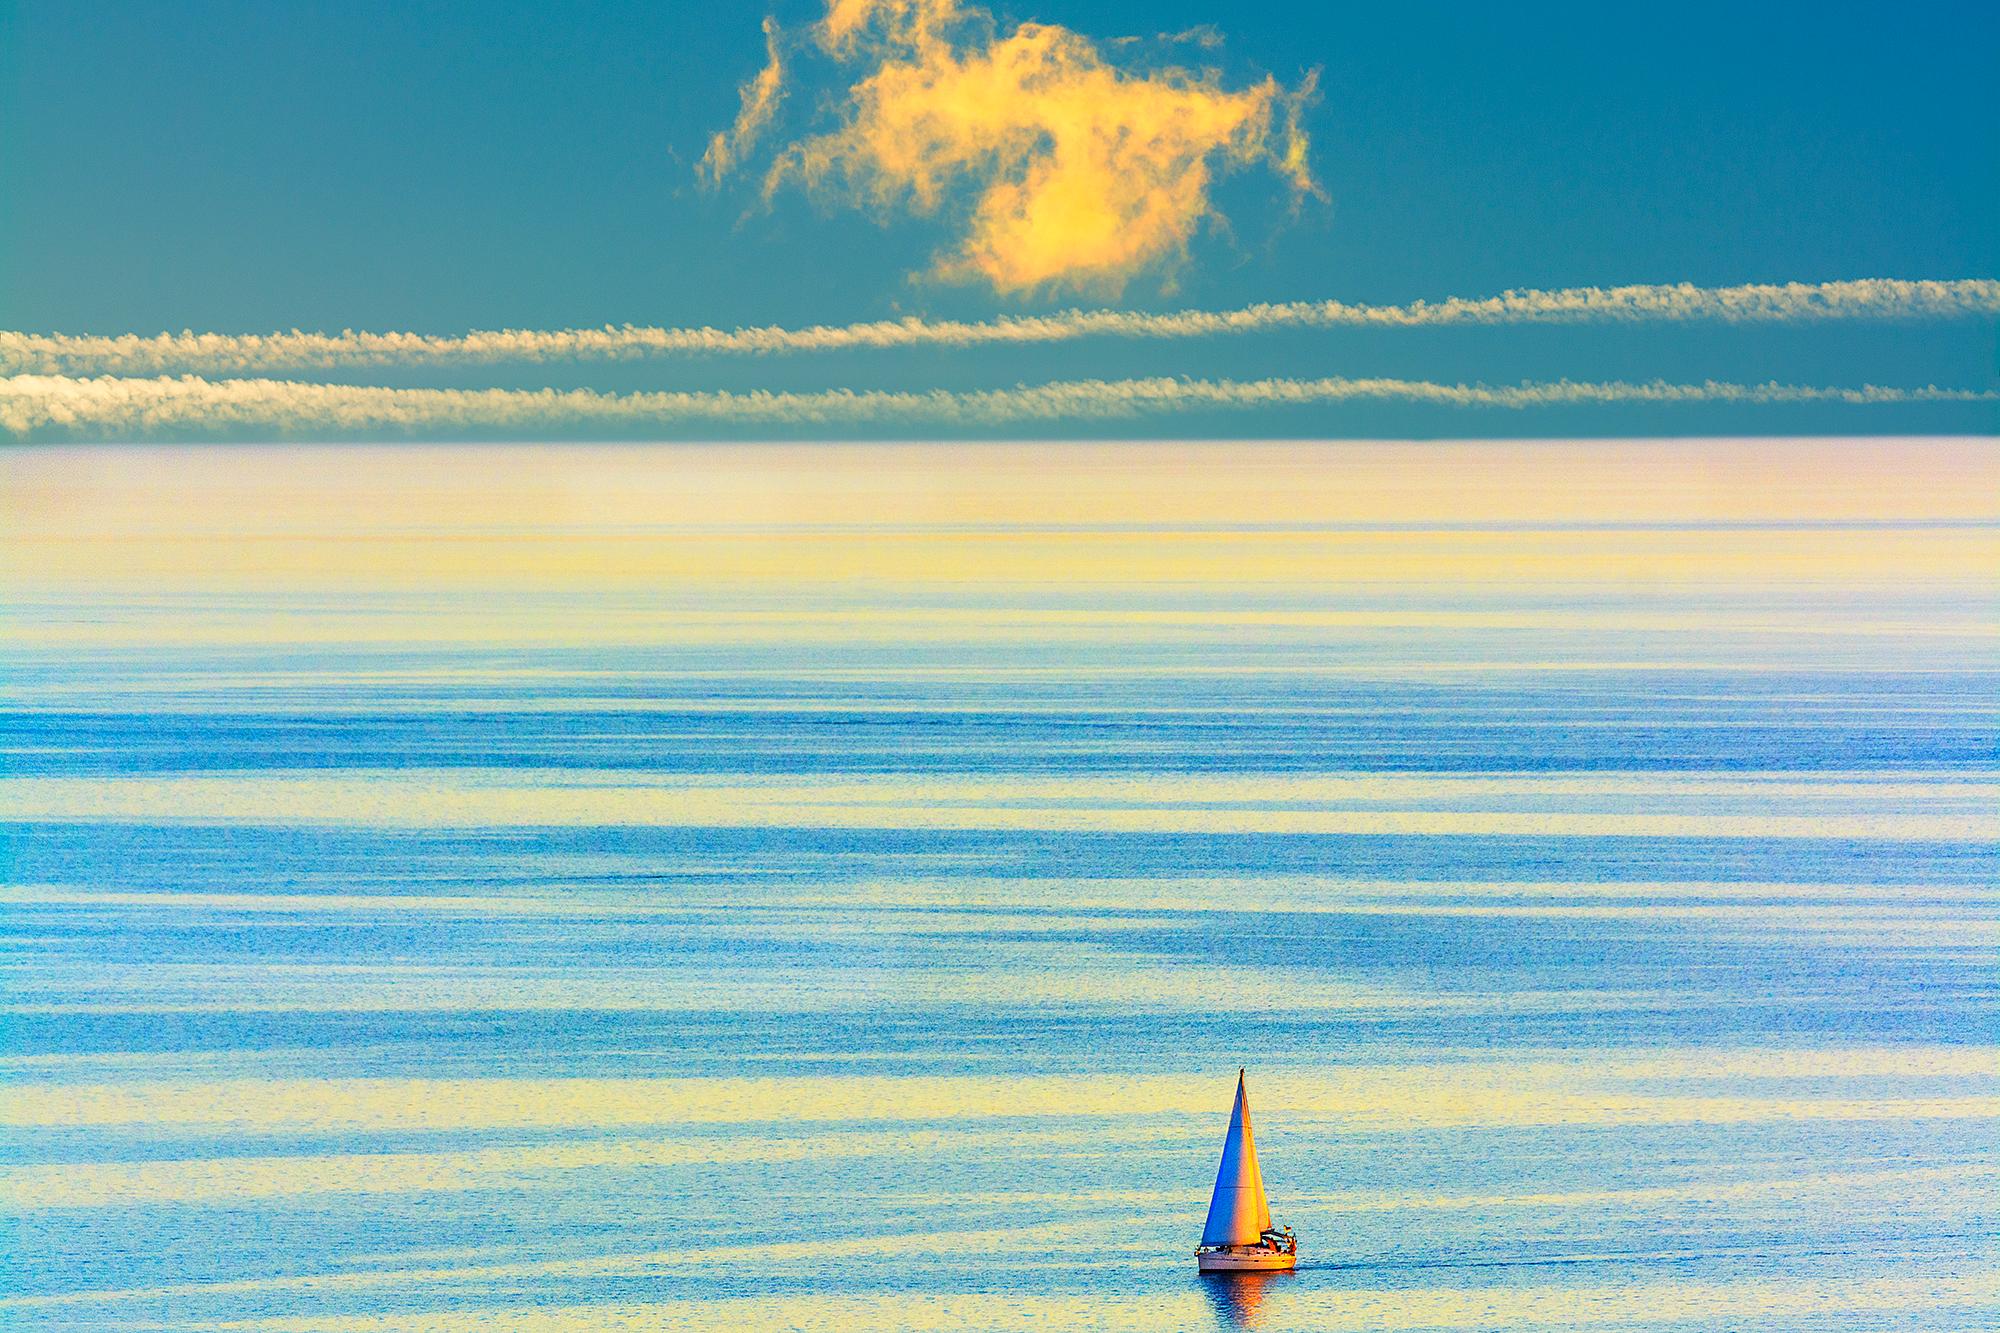 Lone Sailboat on a placid turquoise sea